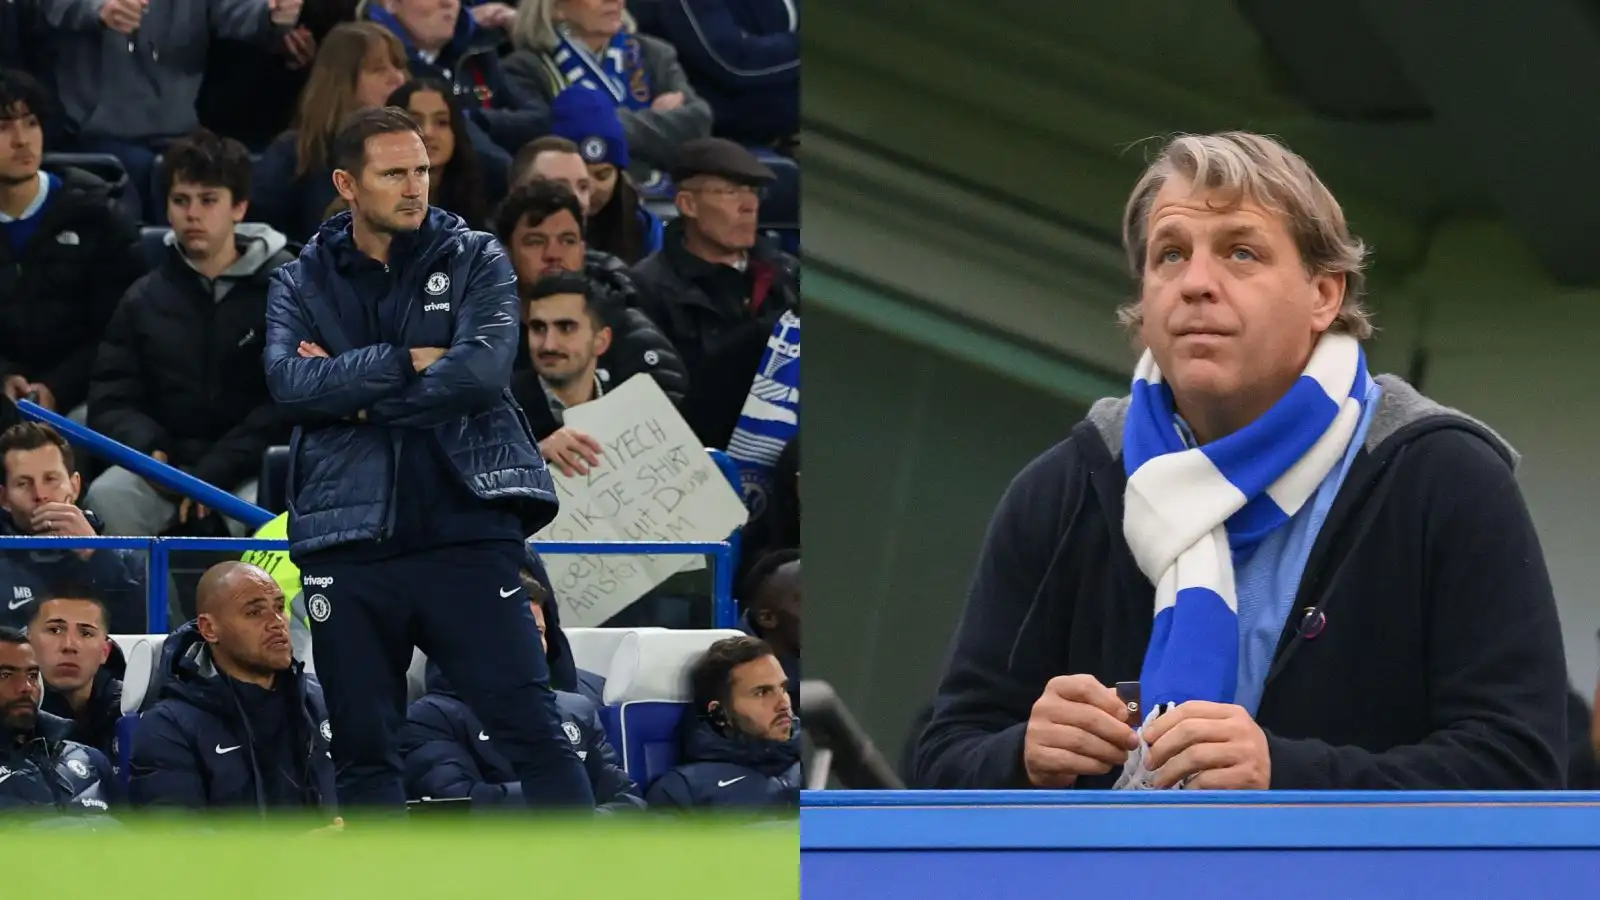 Chelsea first-team coach 'secretly leaves' Stamford Bridge as